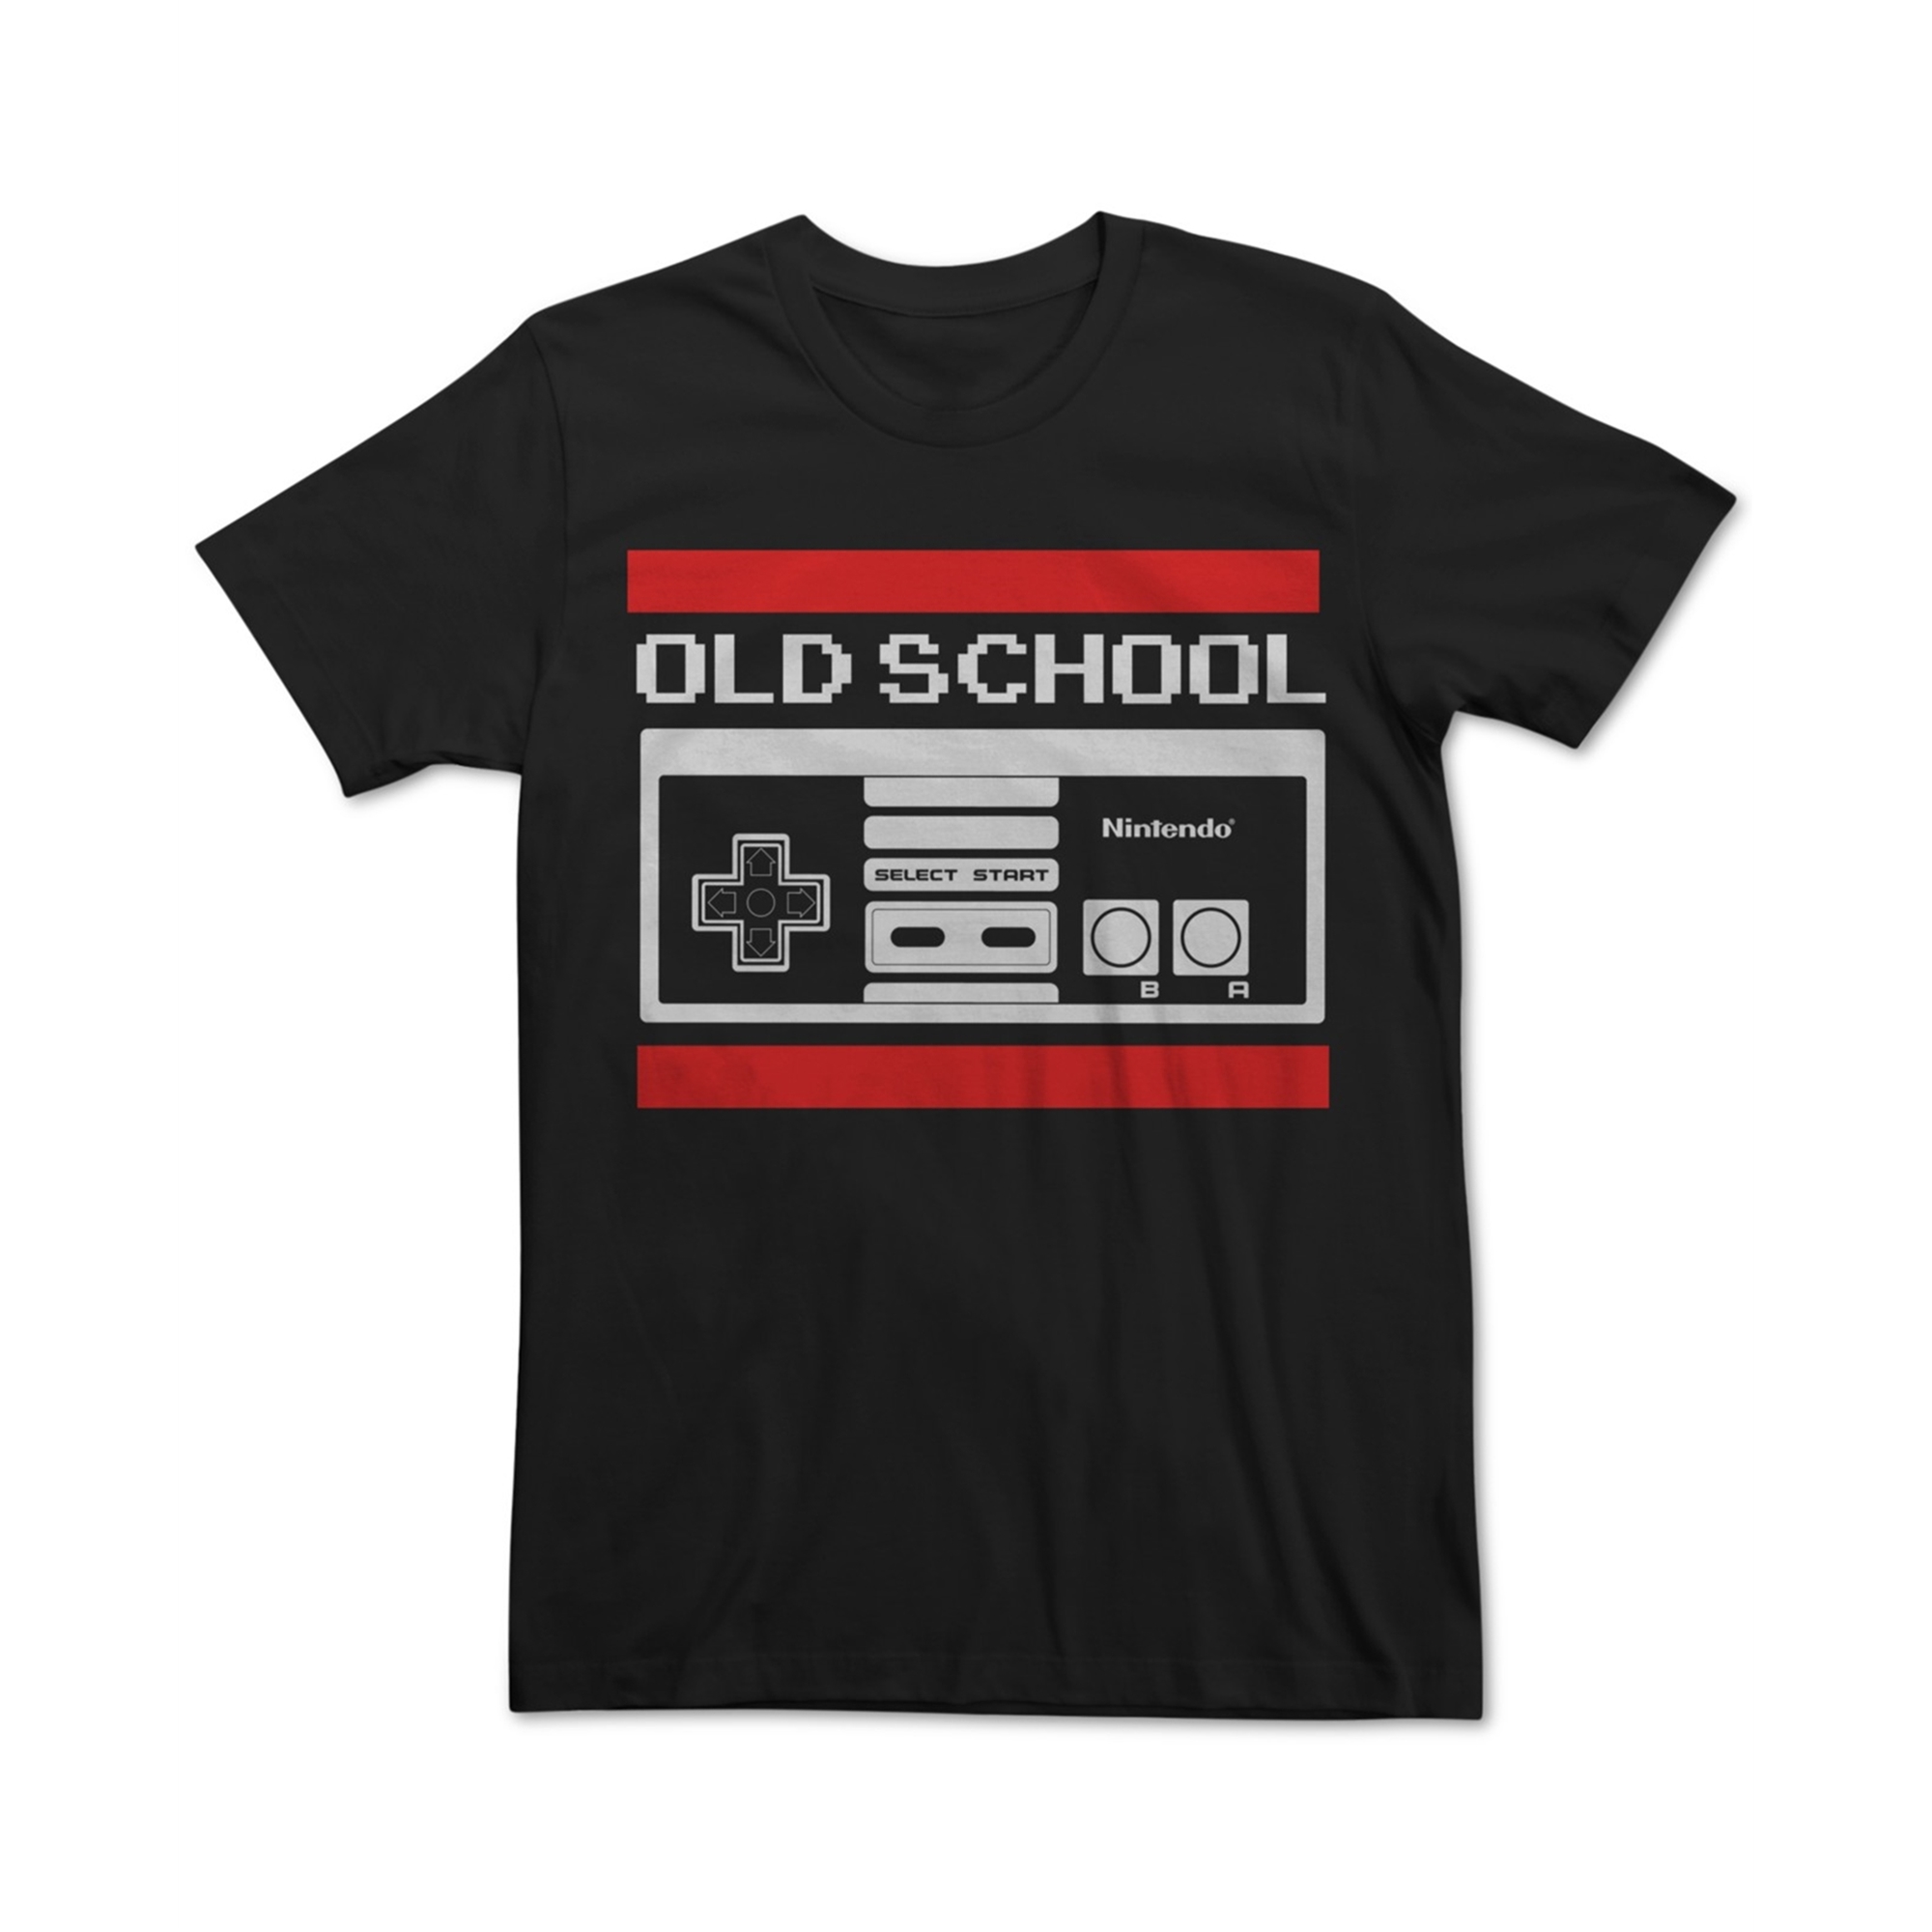 Fifth Sun Mens Old School Graphic T-Shirt, Black, Medium - image 1 of 2